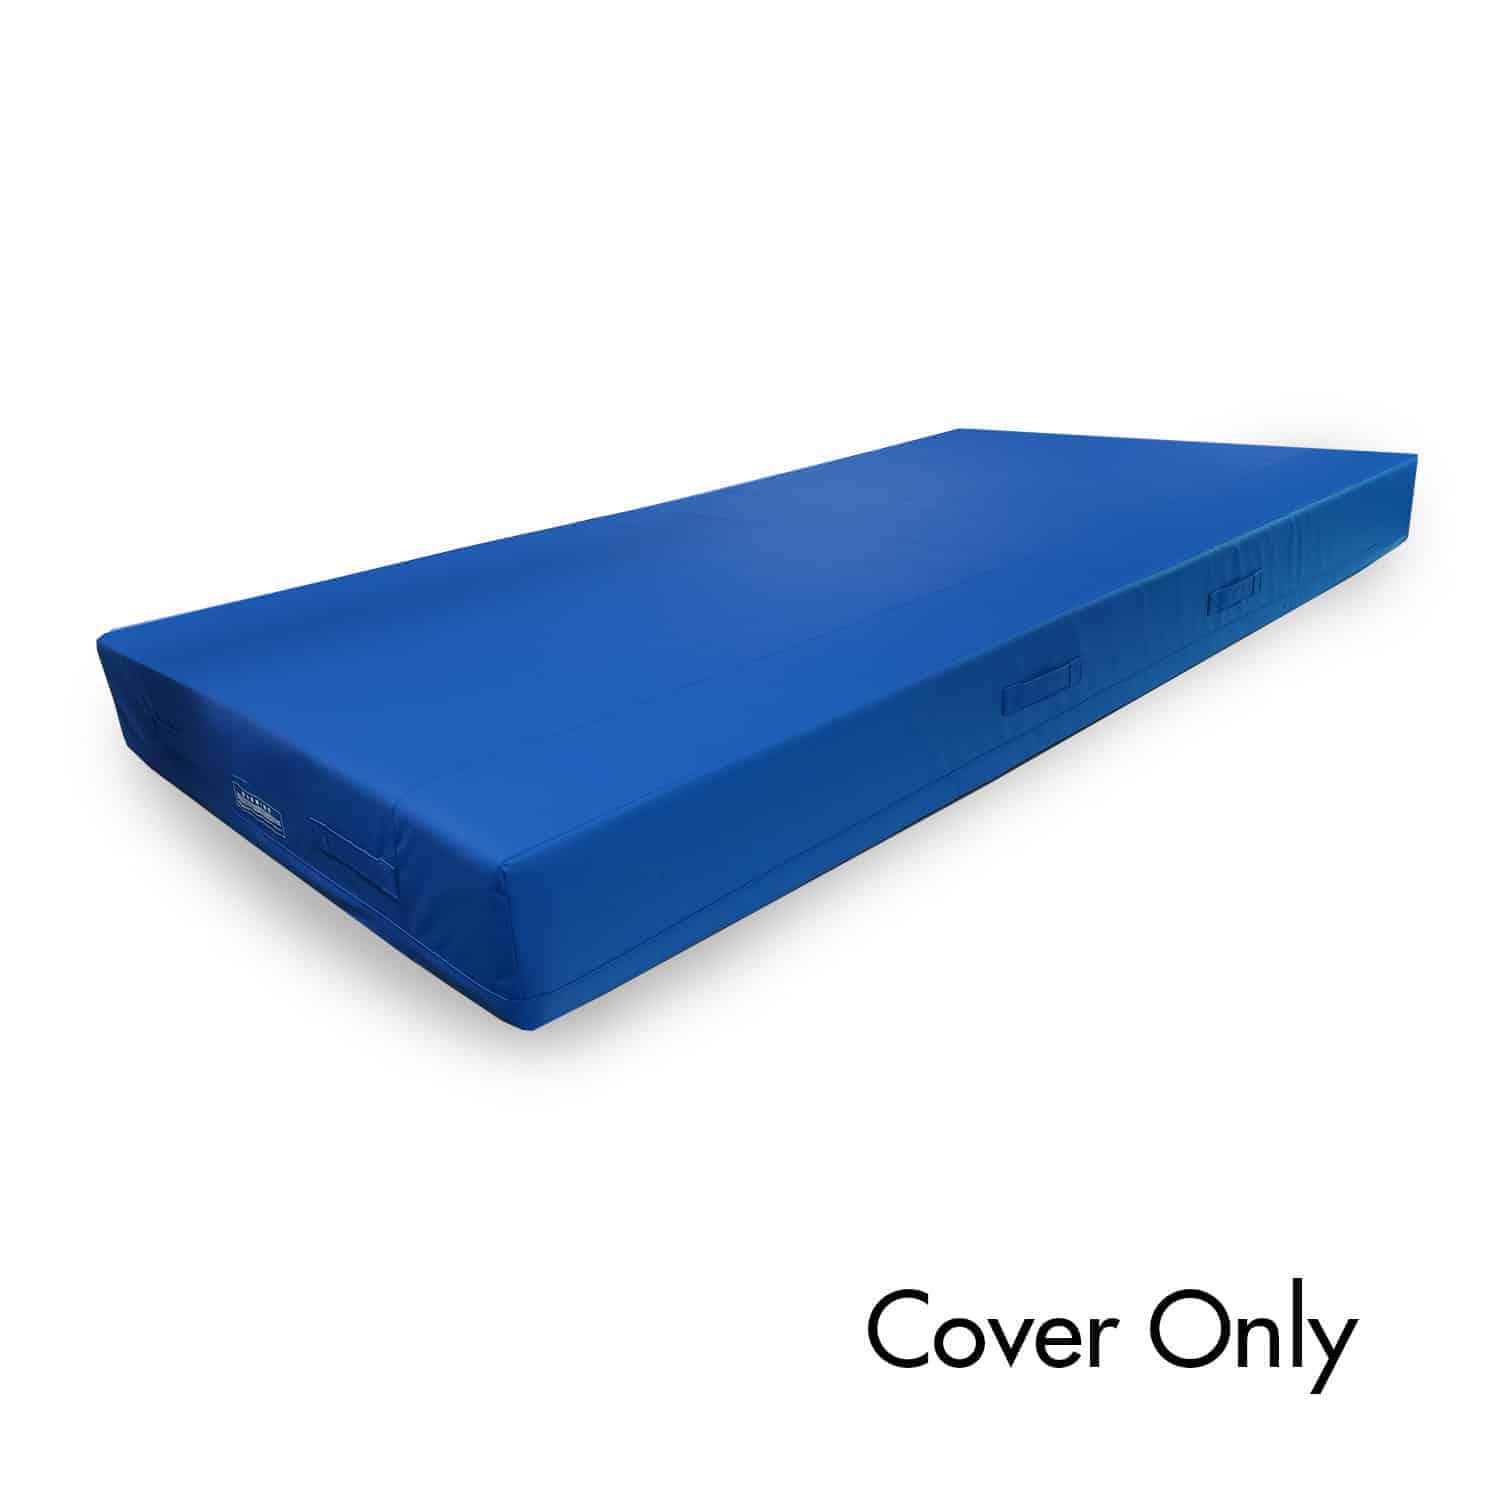 https://appleathletic.com/wp-content/uploads/2019/11/4-gymnastics-non-folding-landing-mat-replacement-cover.jpg